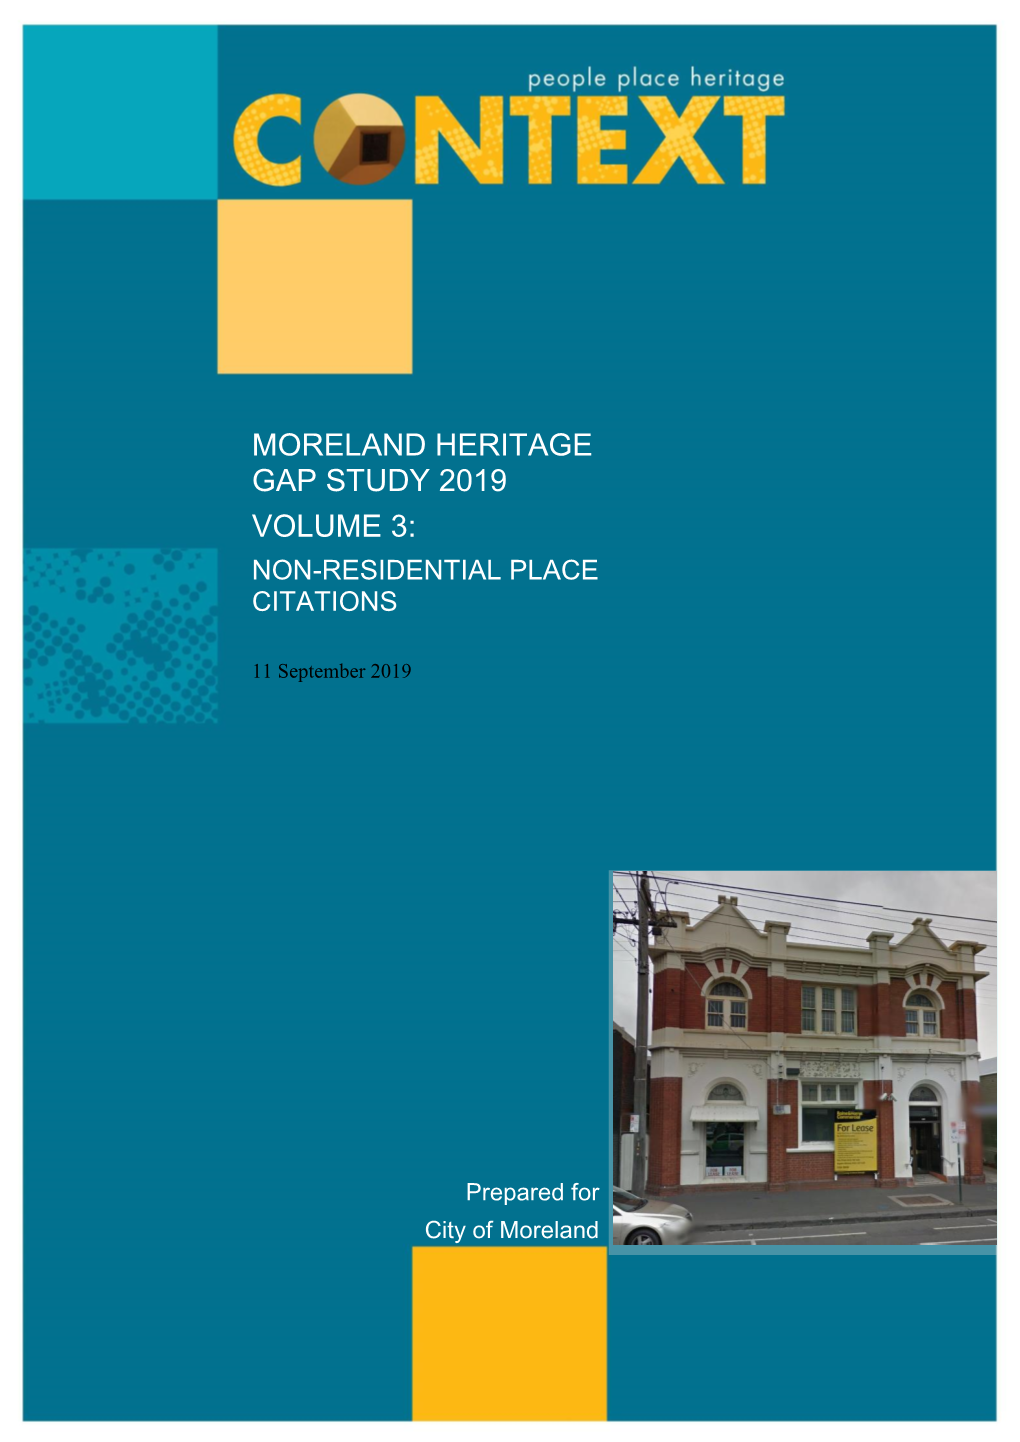 Moreland Heritage Gap Study 2019 Volume 3